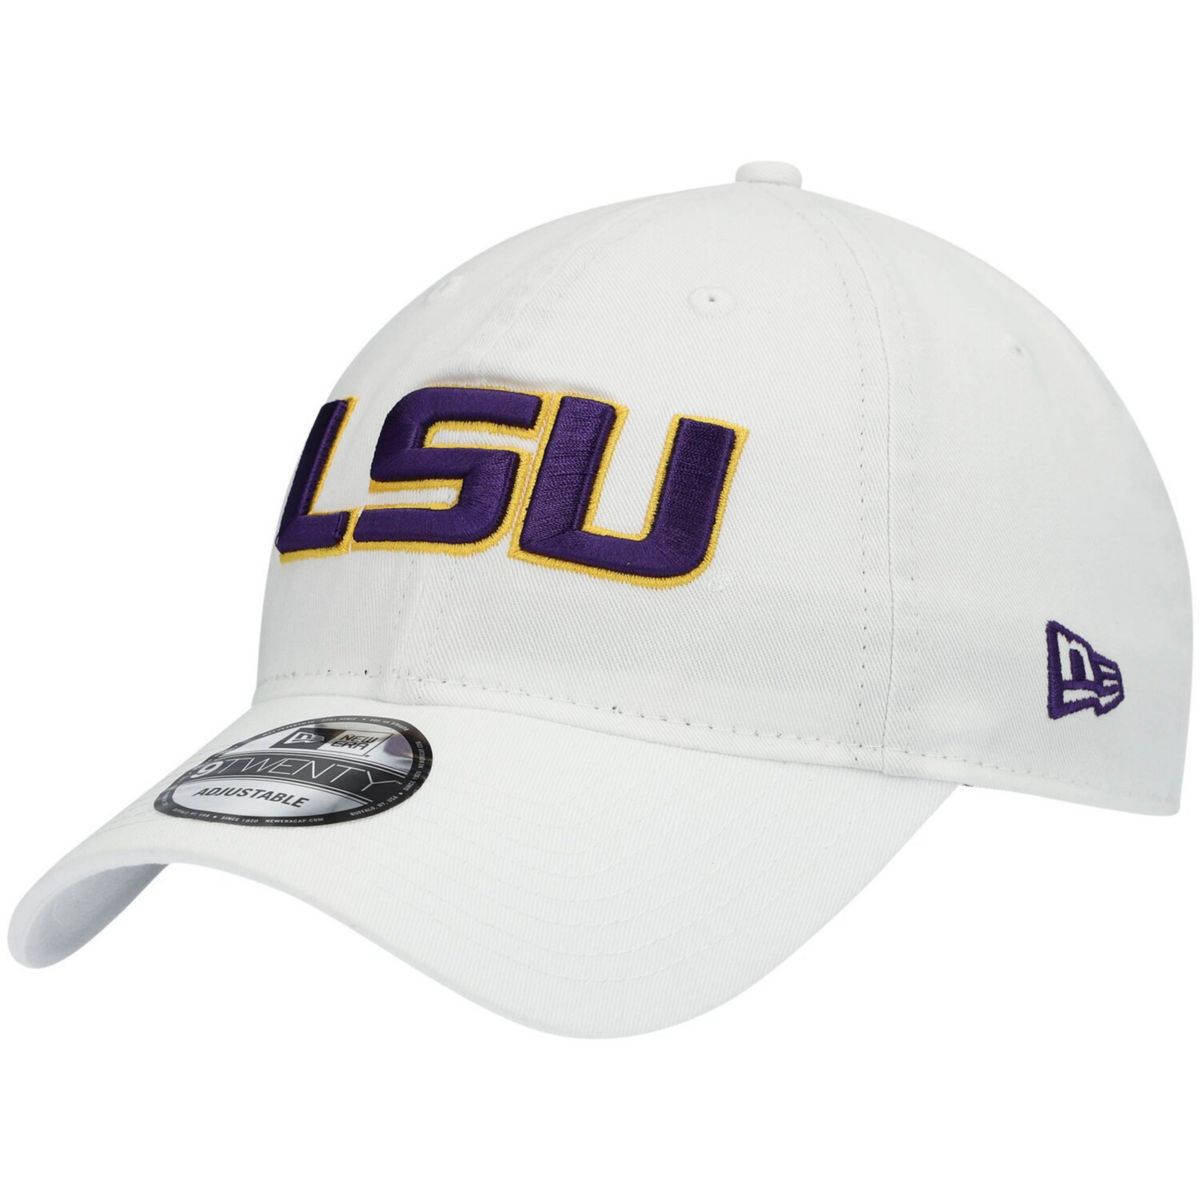 Men's New Era White LSU Tigers Core Classic 2 Adjustable Hat New Era